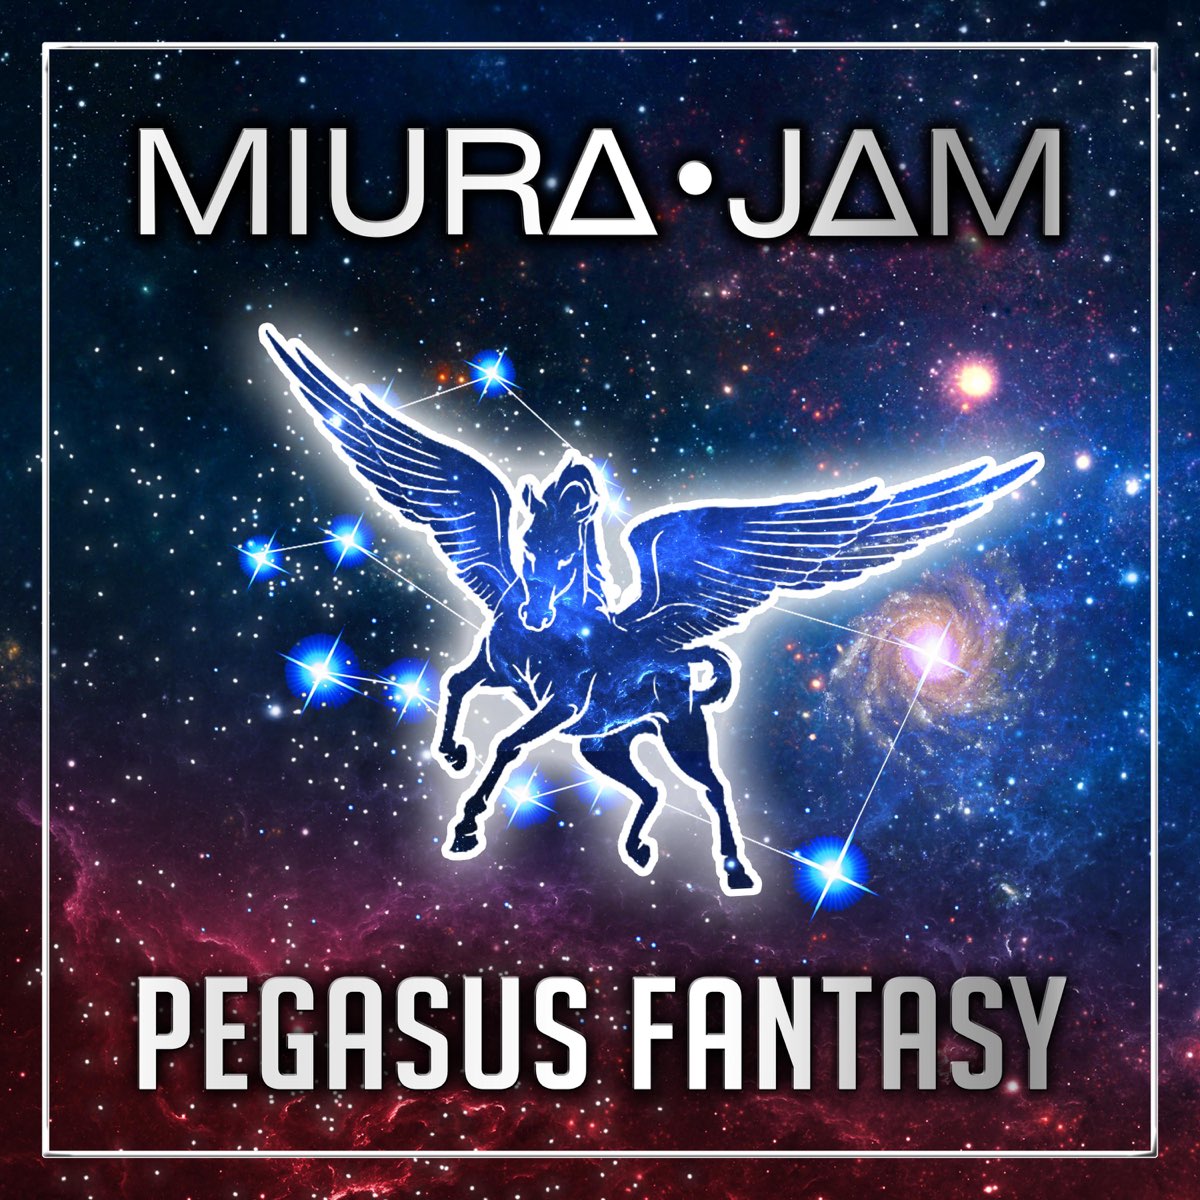 Pegasus Fantasy (Saint Seiya) - Single by Miura Jam on Apple Music